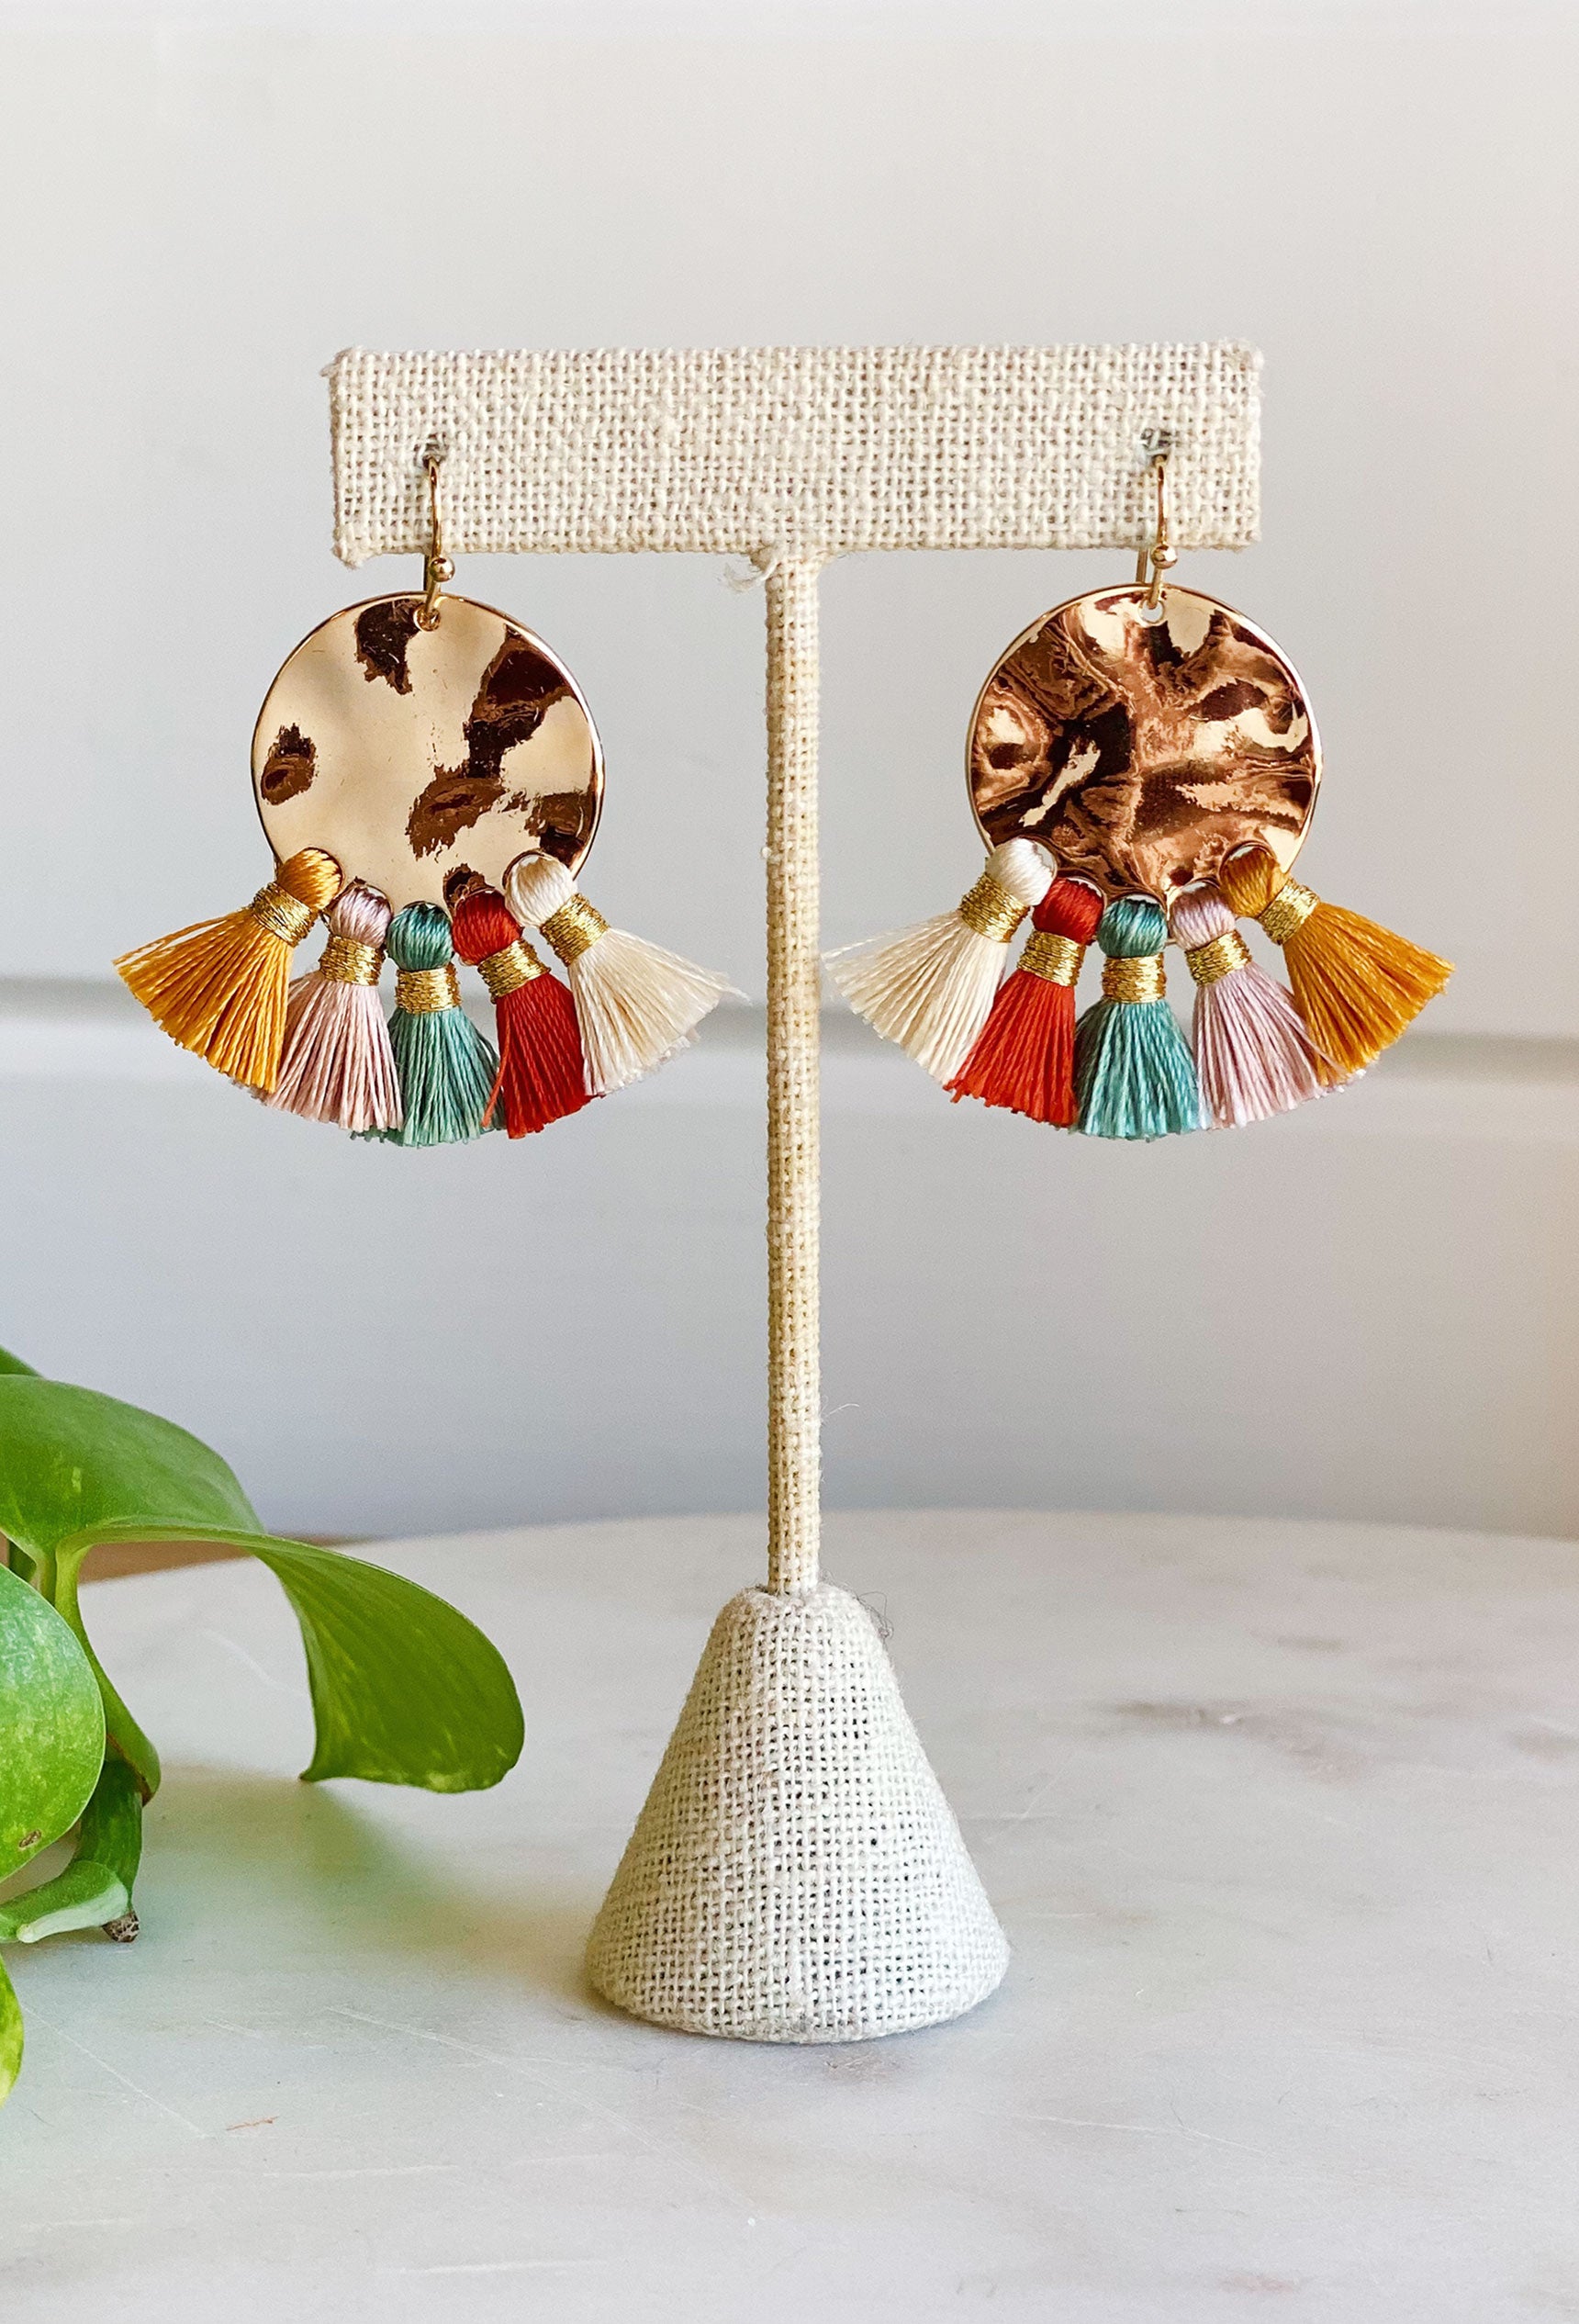 Stella Tassel Earrings in Multi, gold hammered circle, drop earrings, multi colored tassels